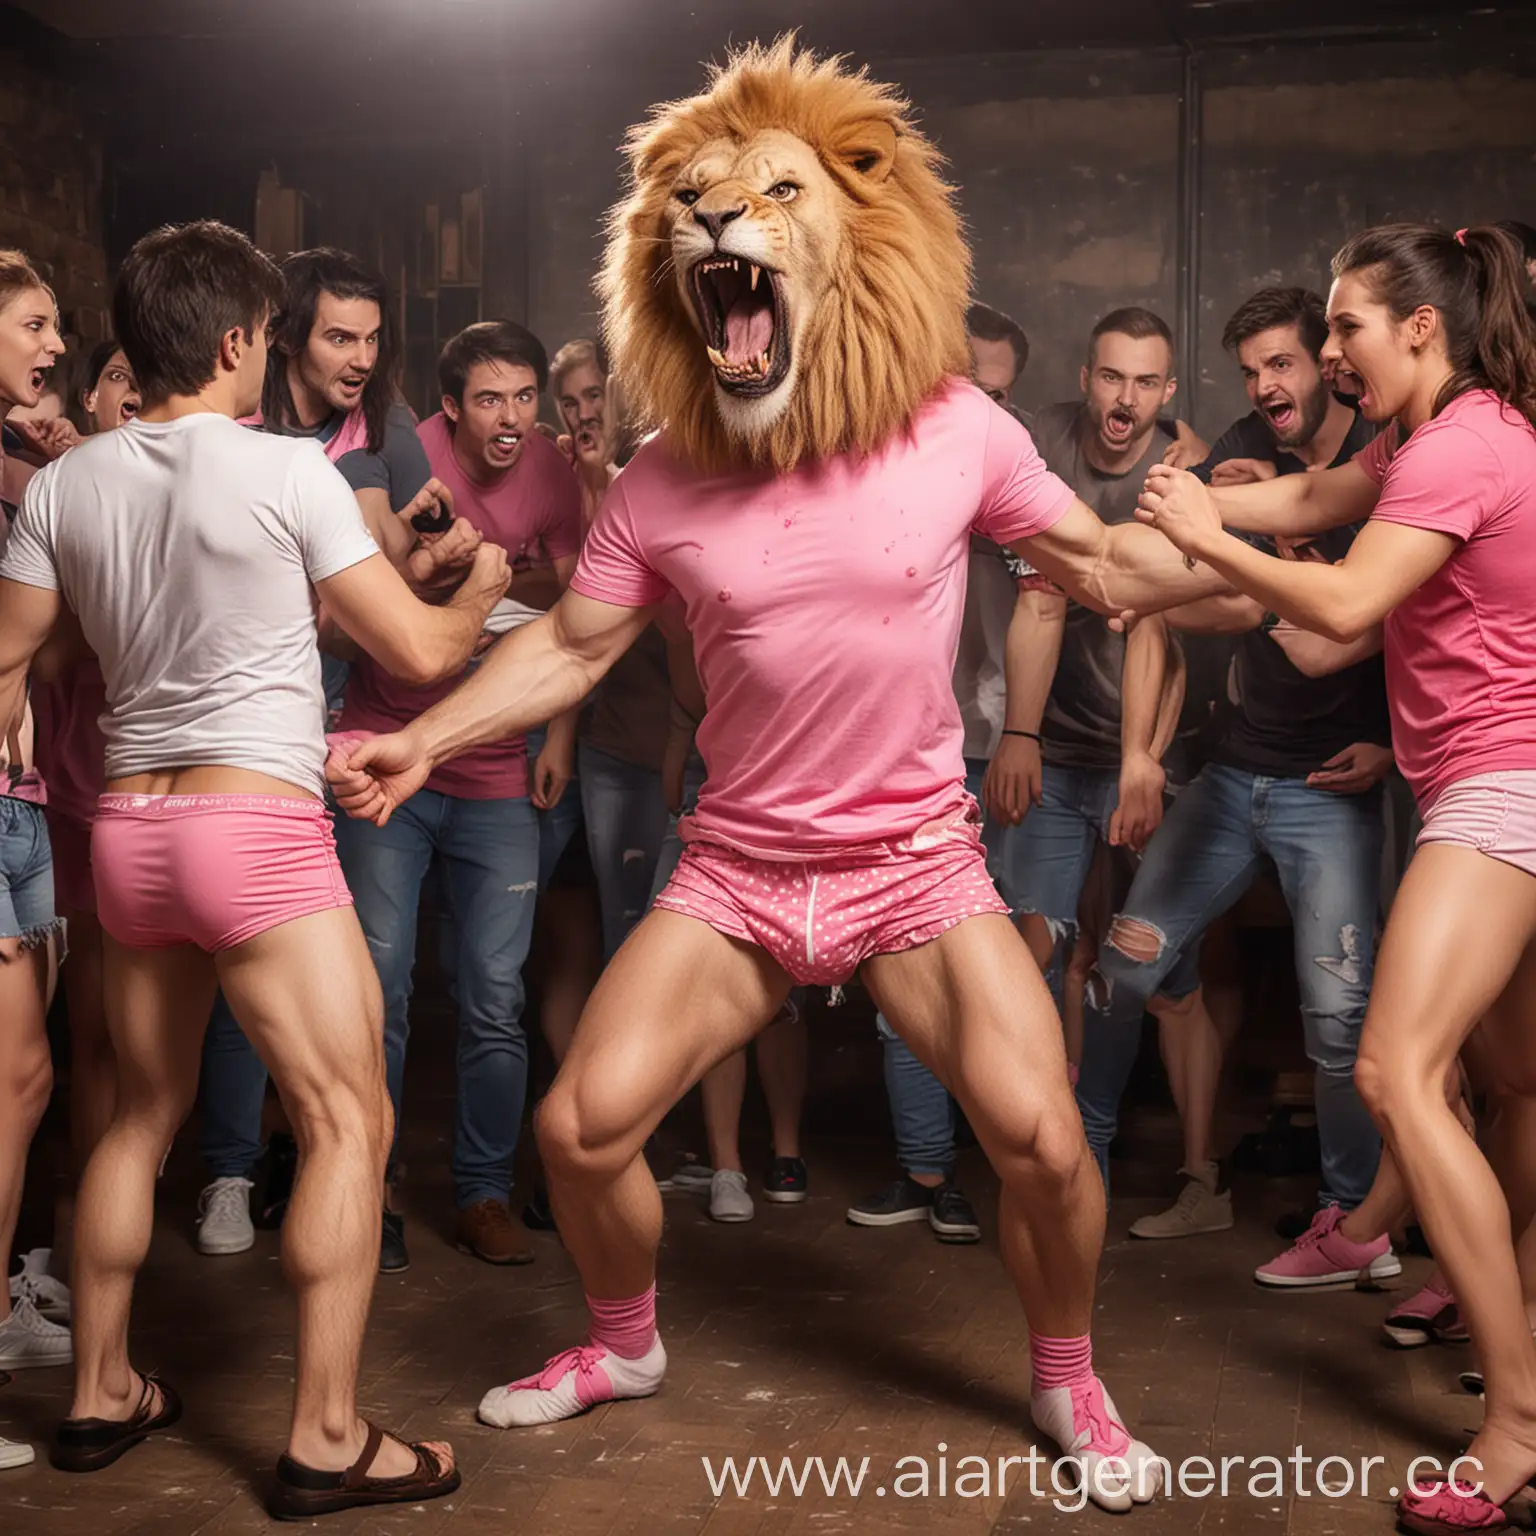 Fierce-LionMan-Brawl-in-Pink-Underwear-at-the-Club